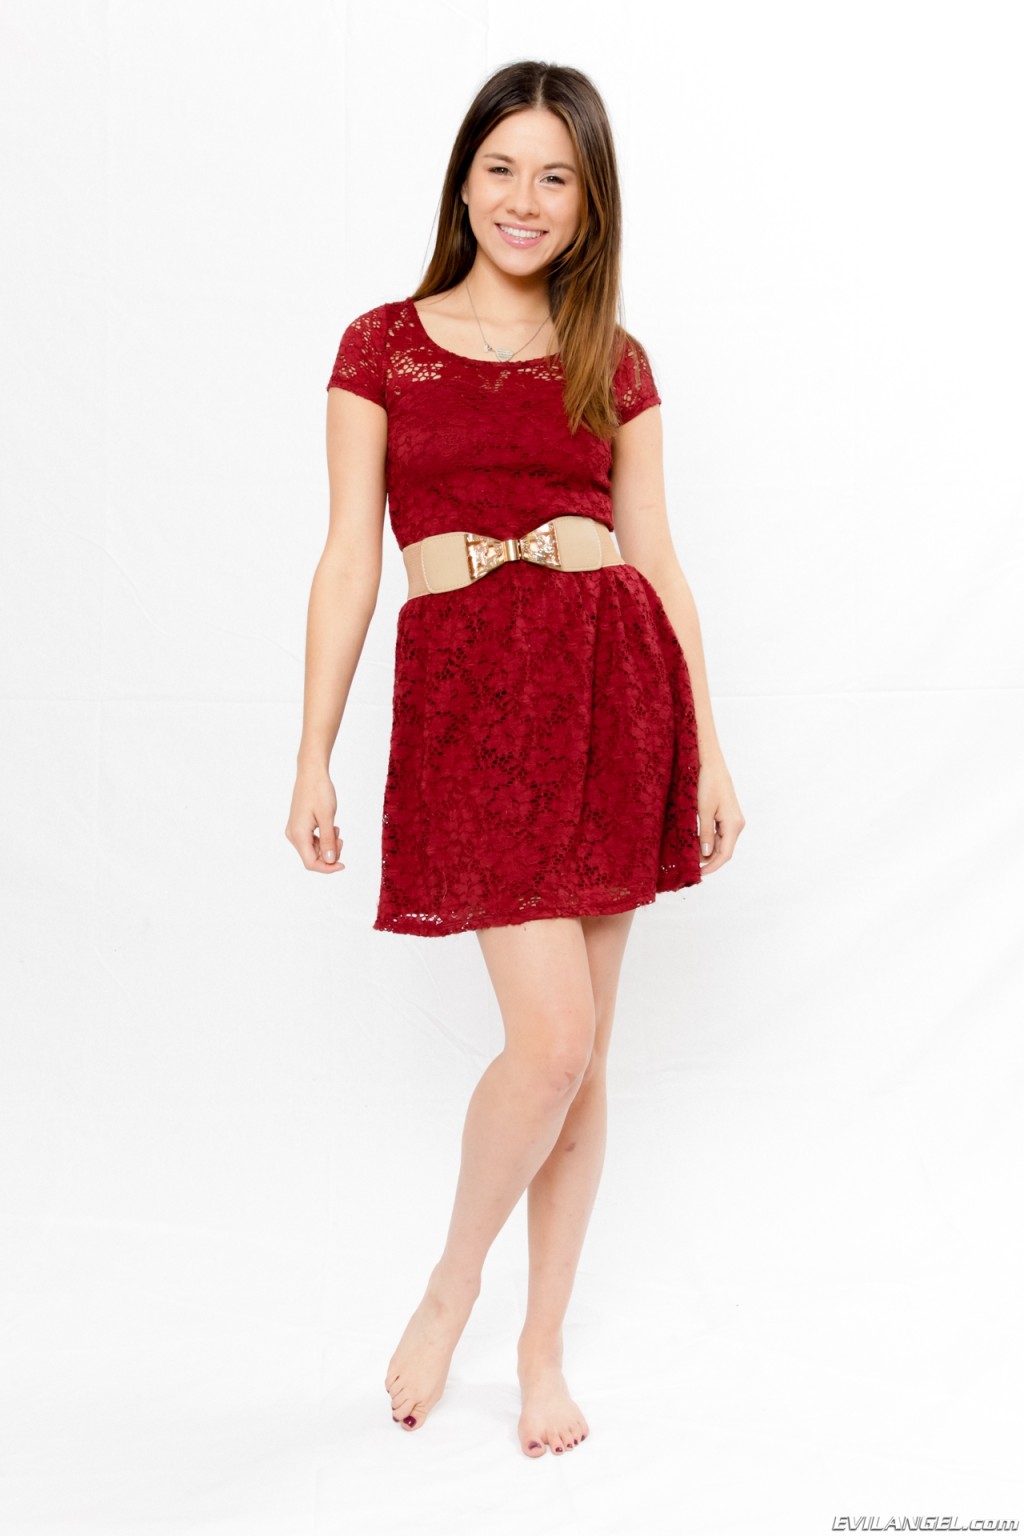 Shyla jennings in vestito rosso
 #76437969